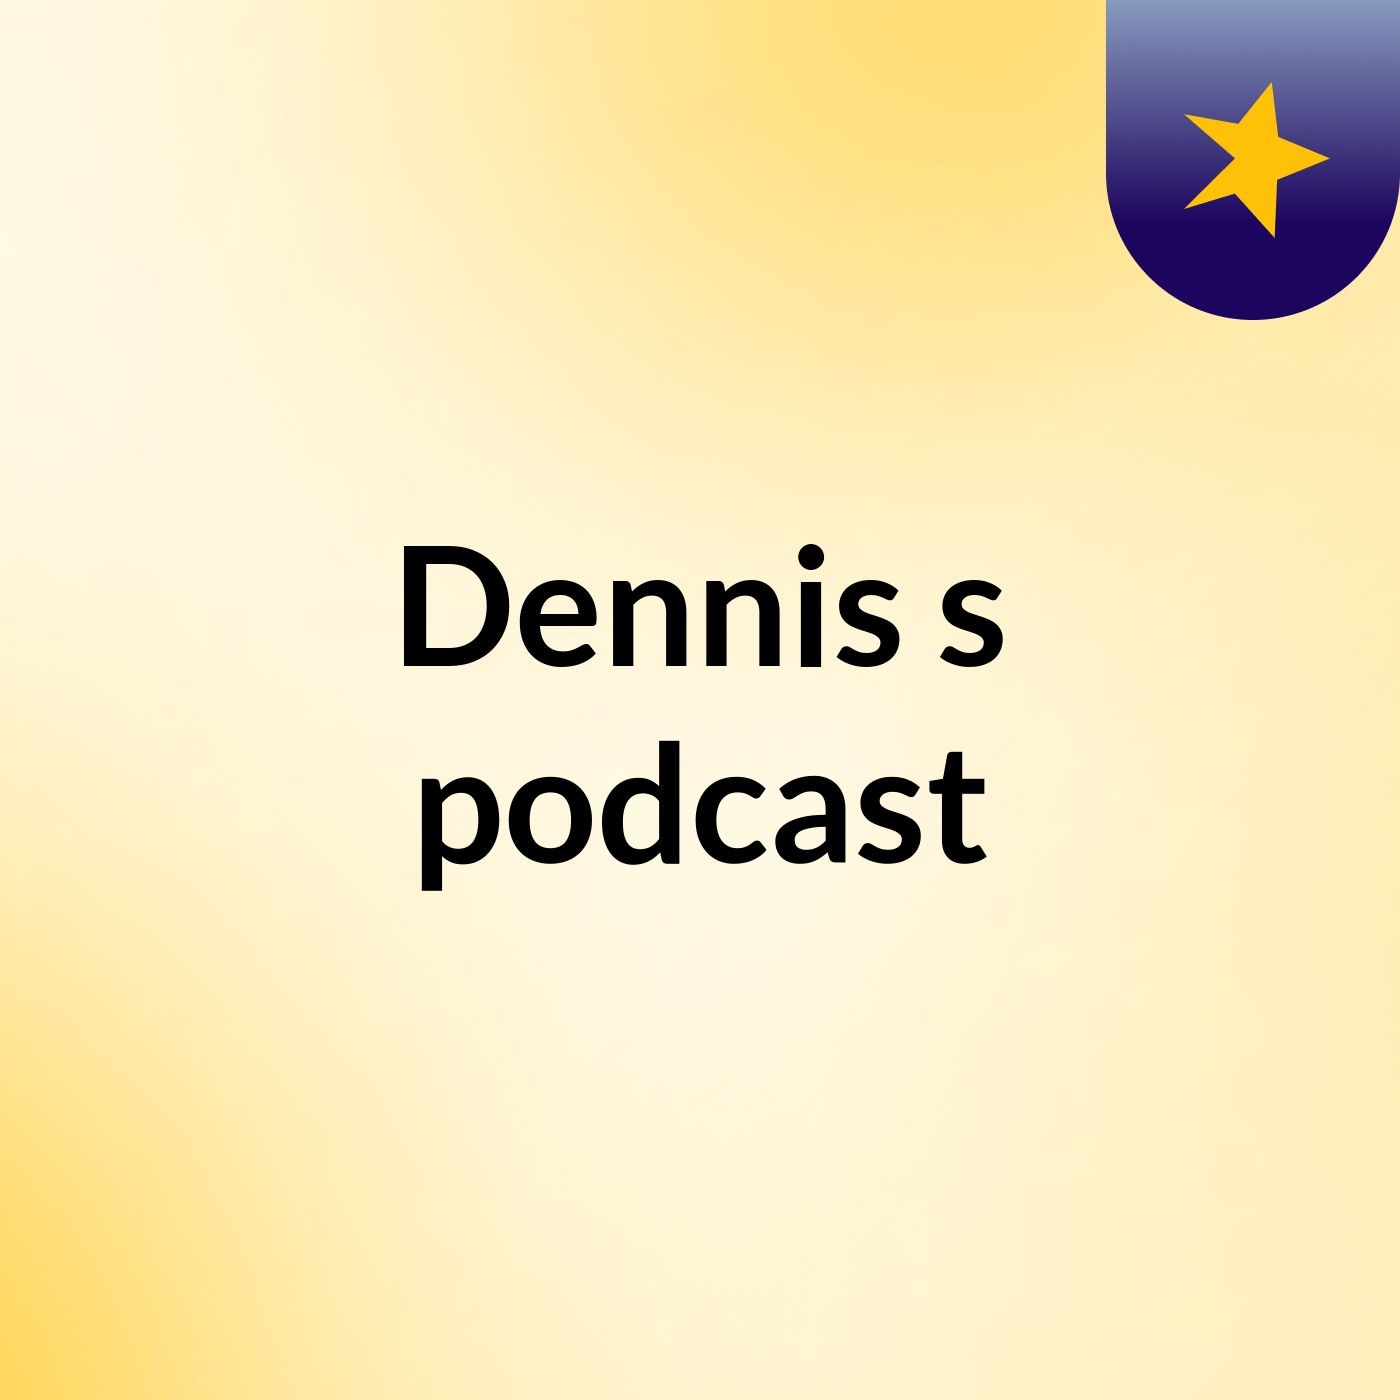 Dennis's podcast